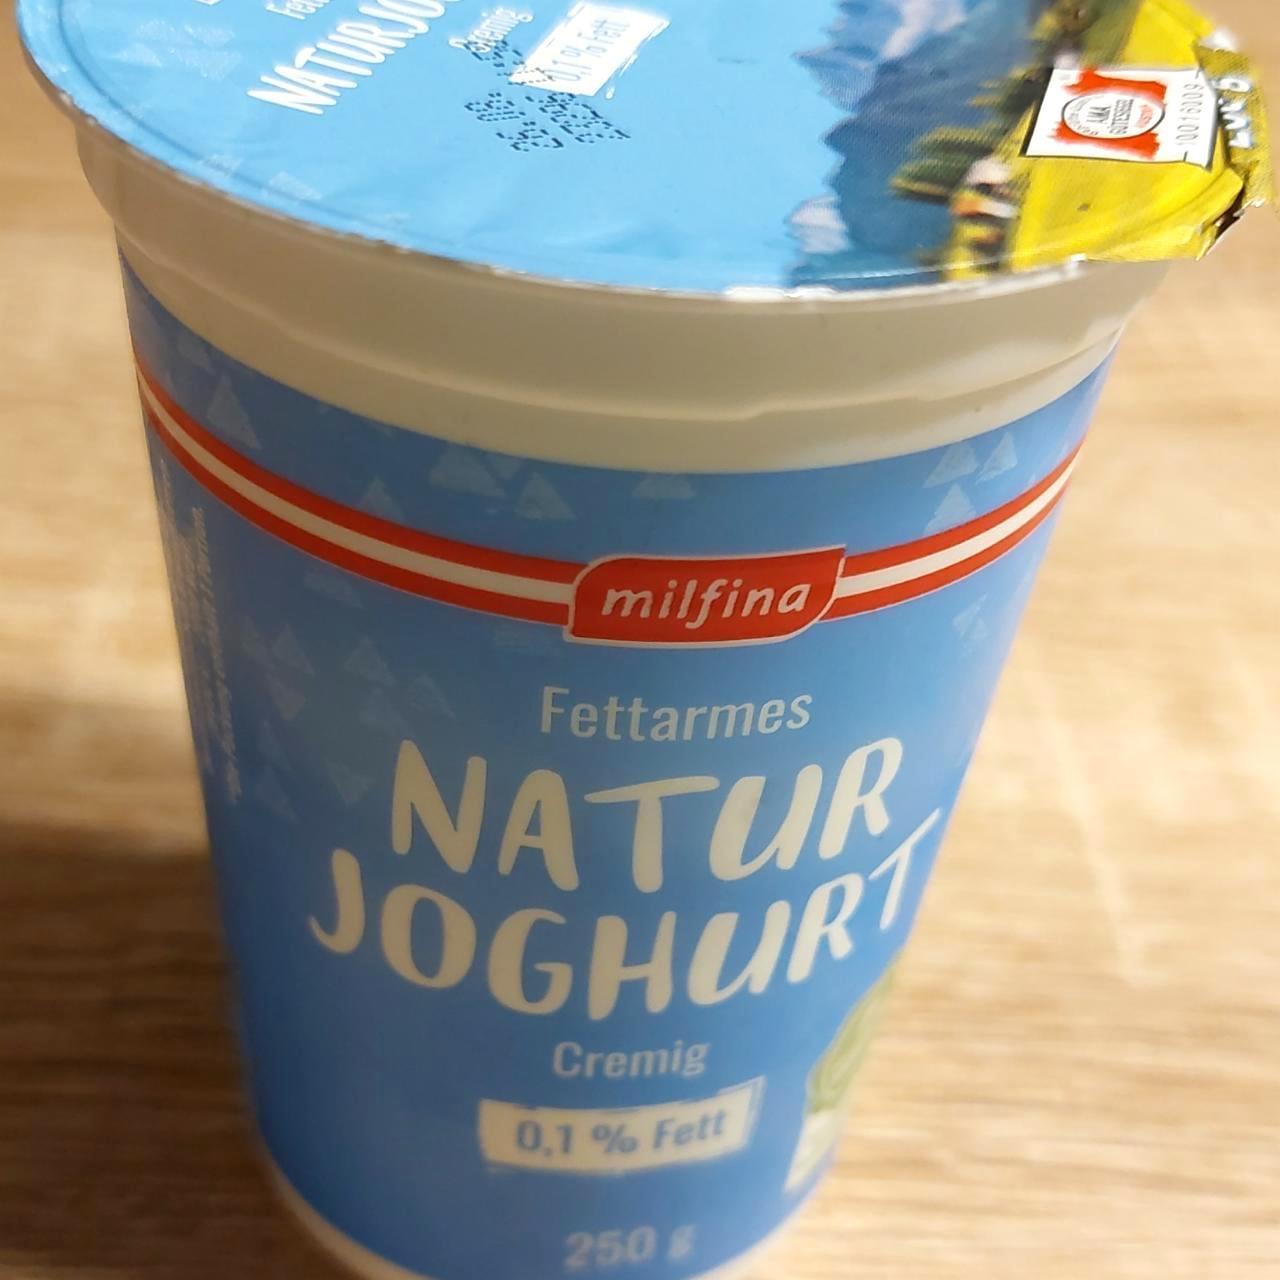 Fotografie - Fettarmes Natur Joghurt Cremig 0,1% Fett Milfina